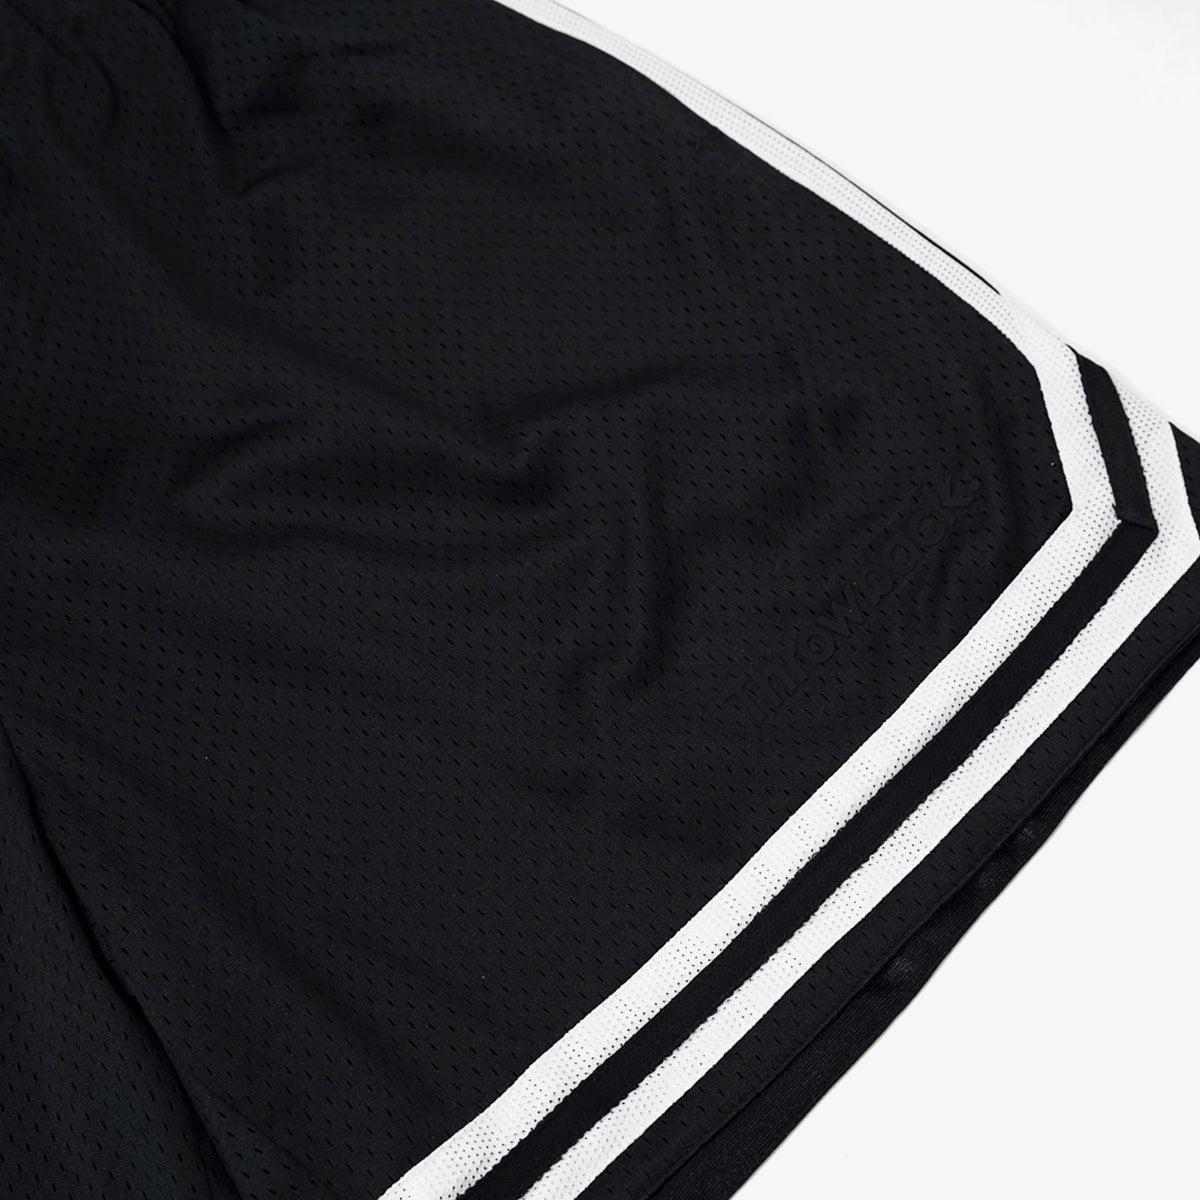 Throwback Blacktop Classic Mesh Shorts with Pockets - Black